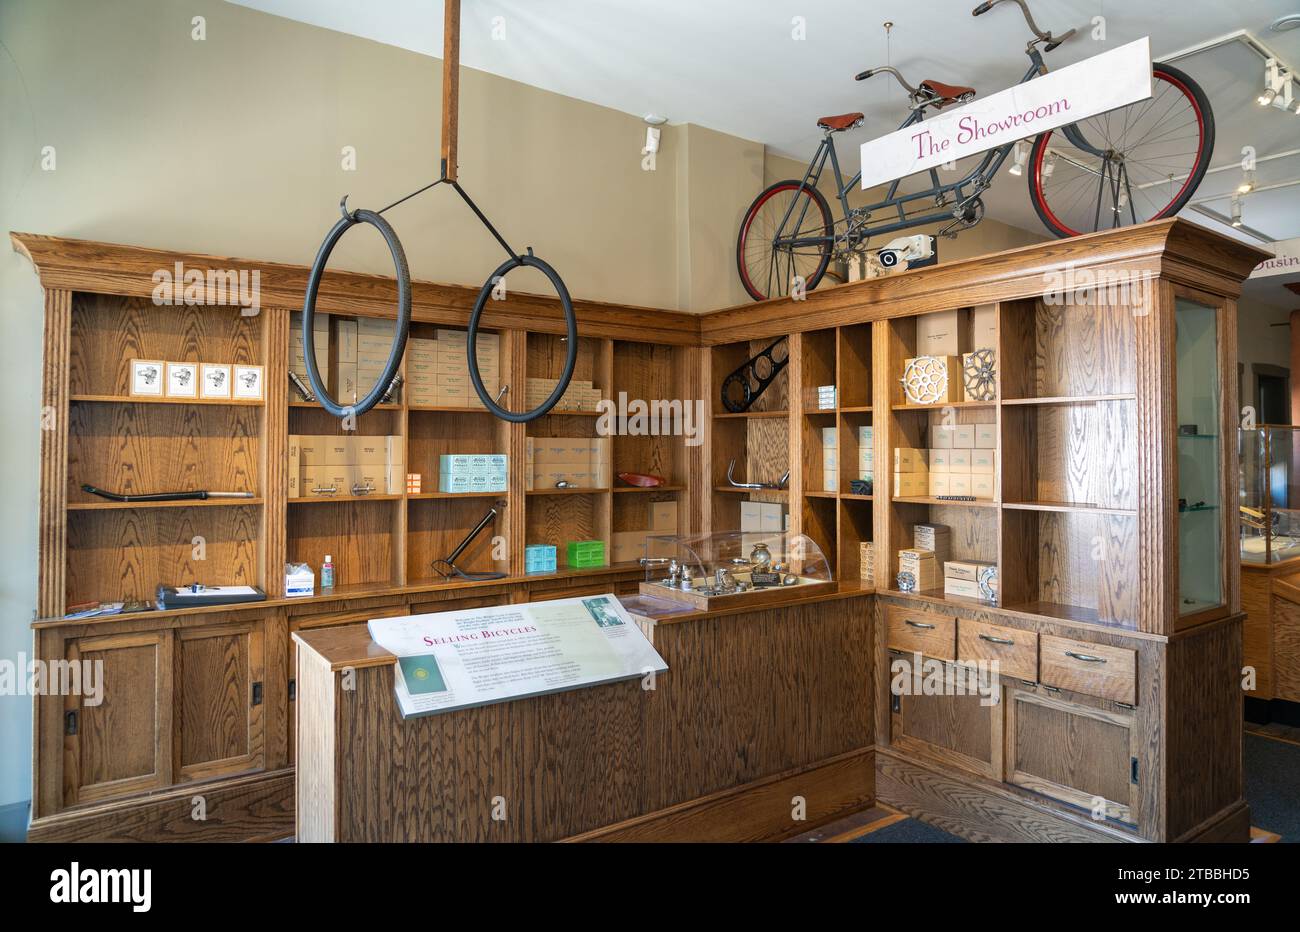 Der Historic Bike Shop, der Wright Cycle Company Complex in Dayton, Ohio Stockfoto